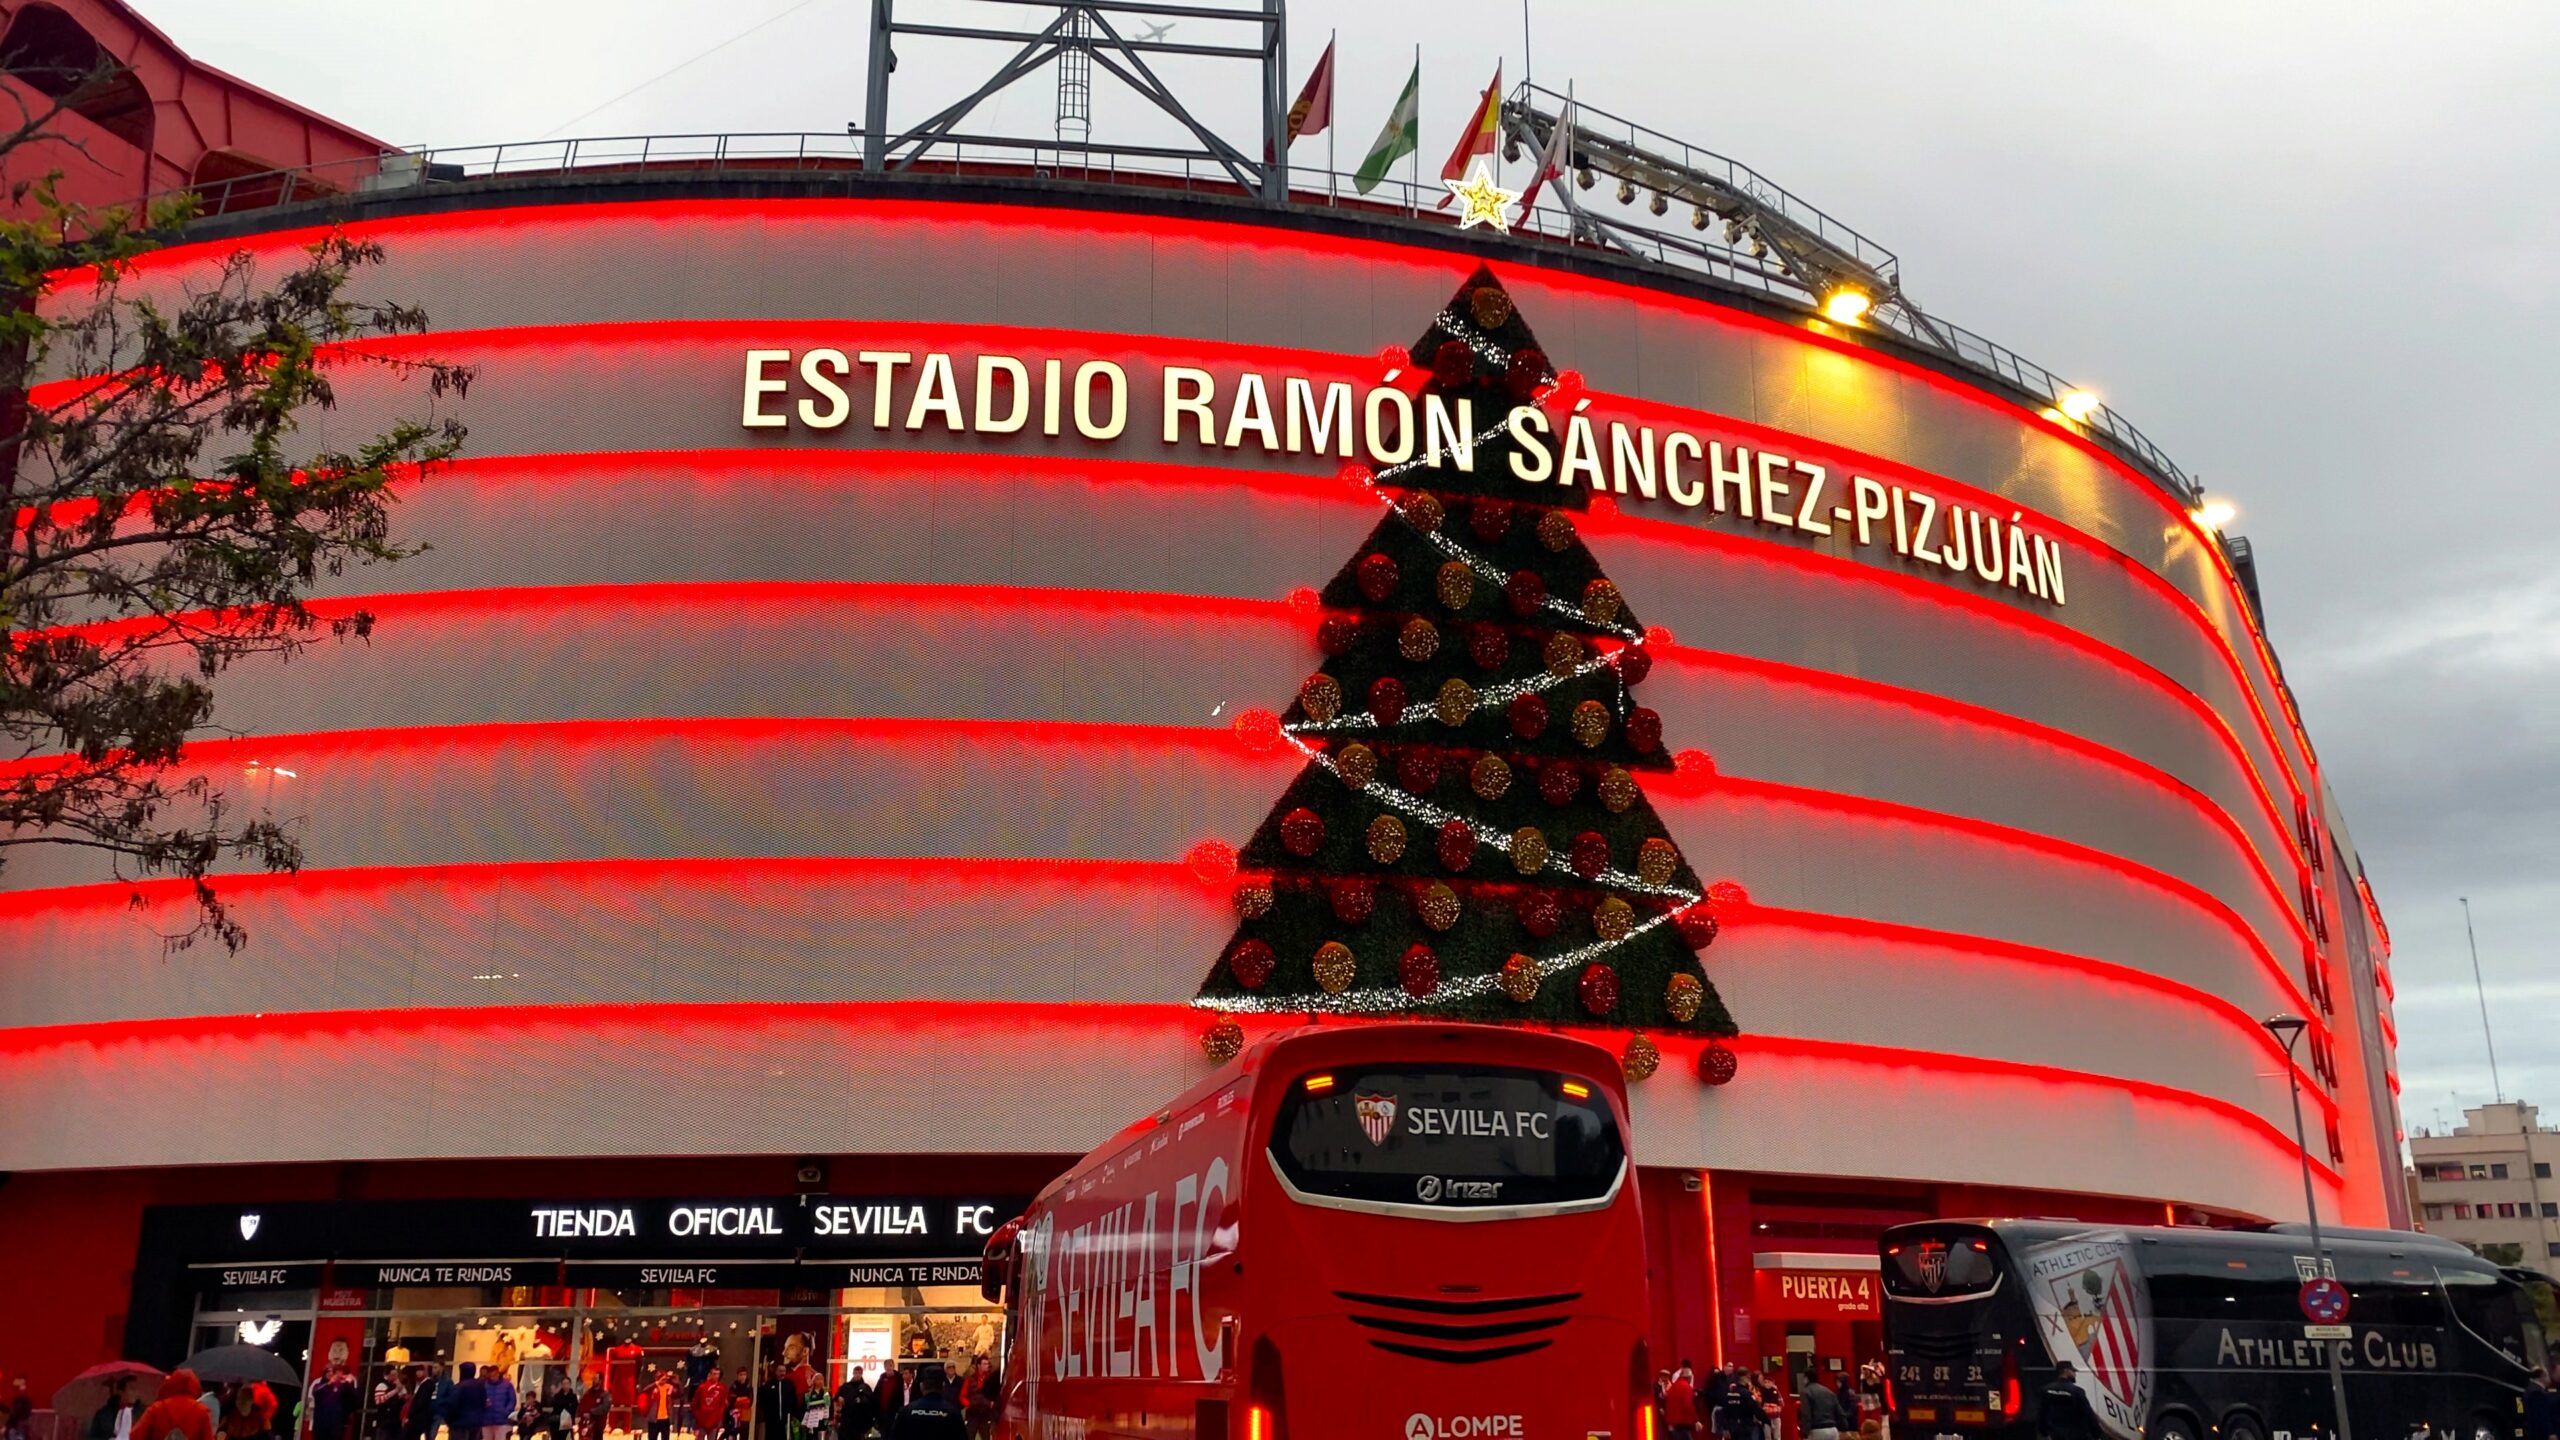 Estadio Ramón Sánchez Pizjuán, the home stadium of Sevilla FC